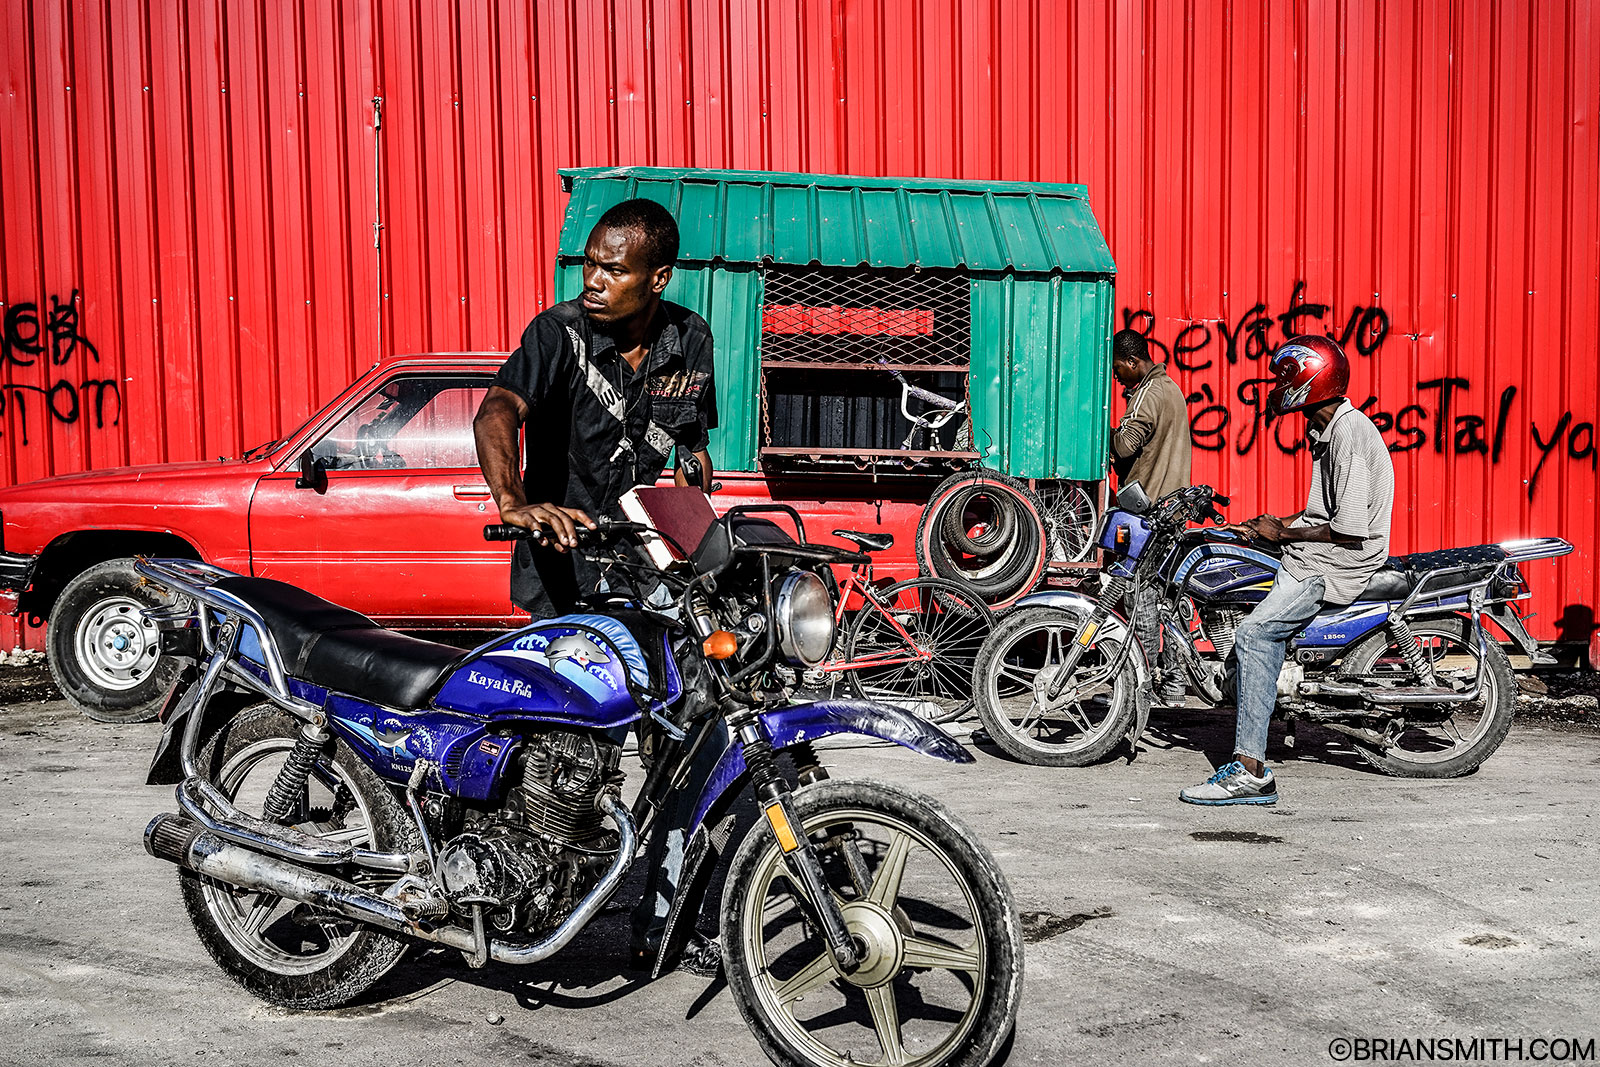 Brian Smith Haiti award winning photojournalism documentary photography